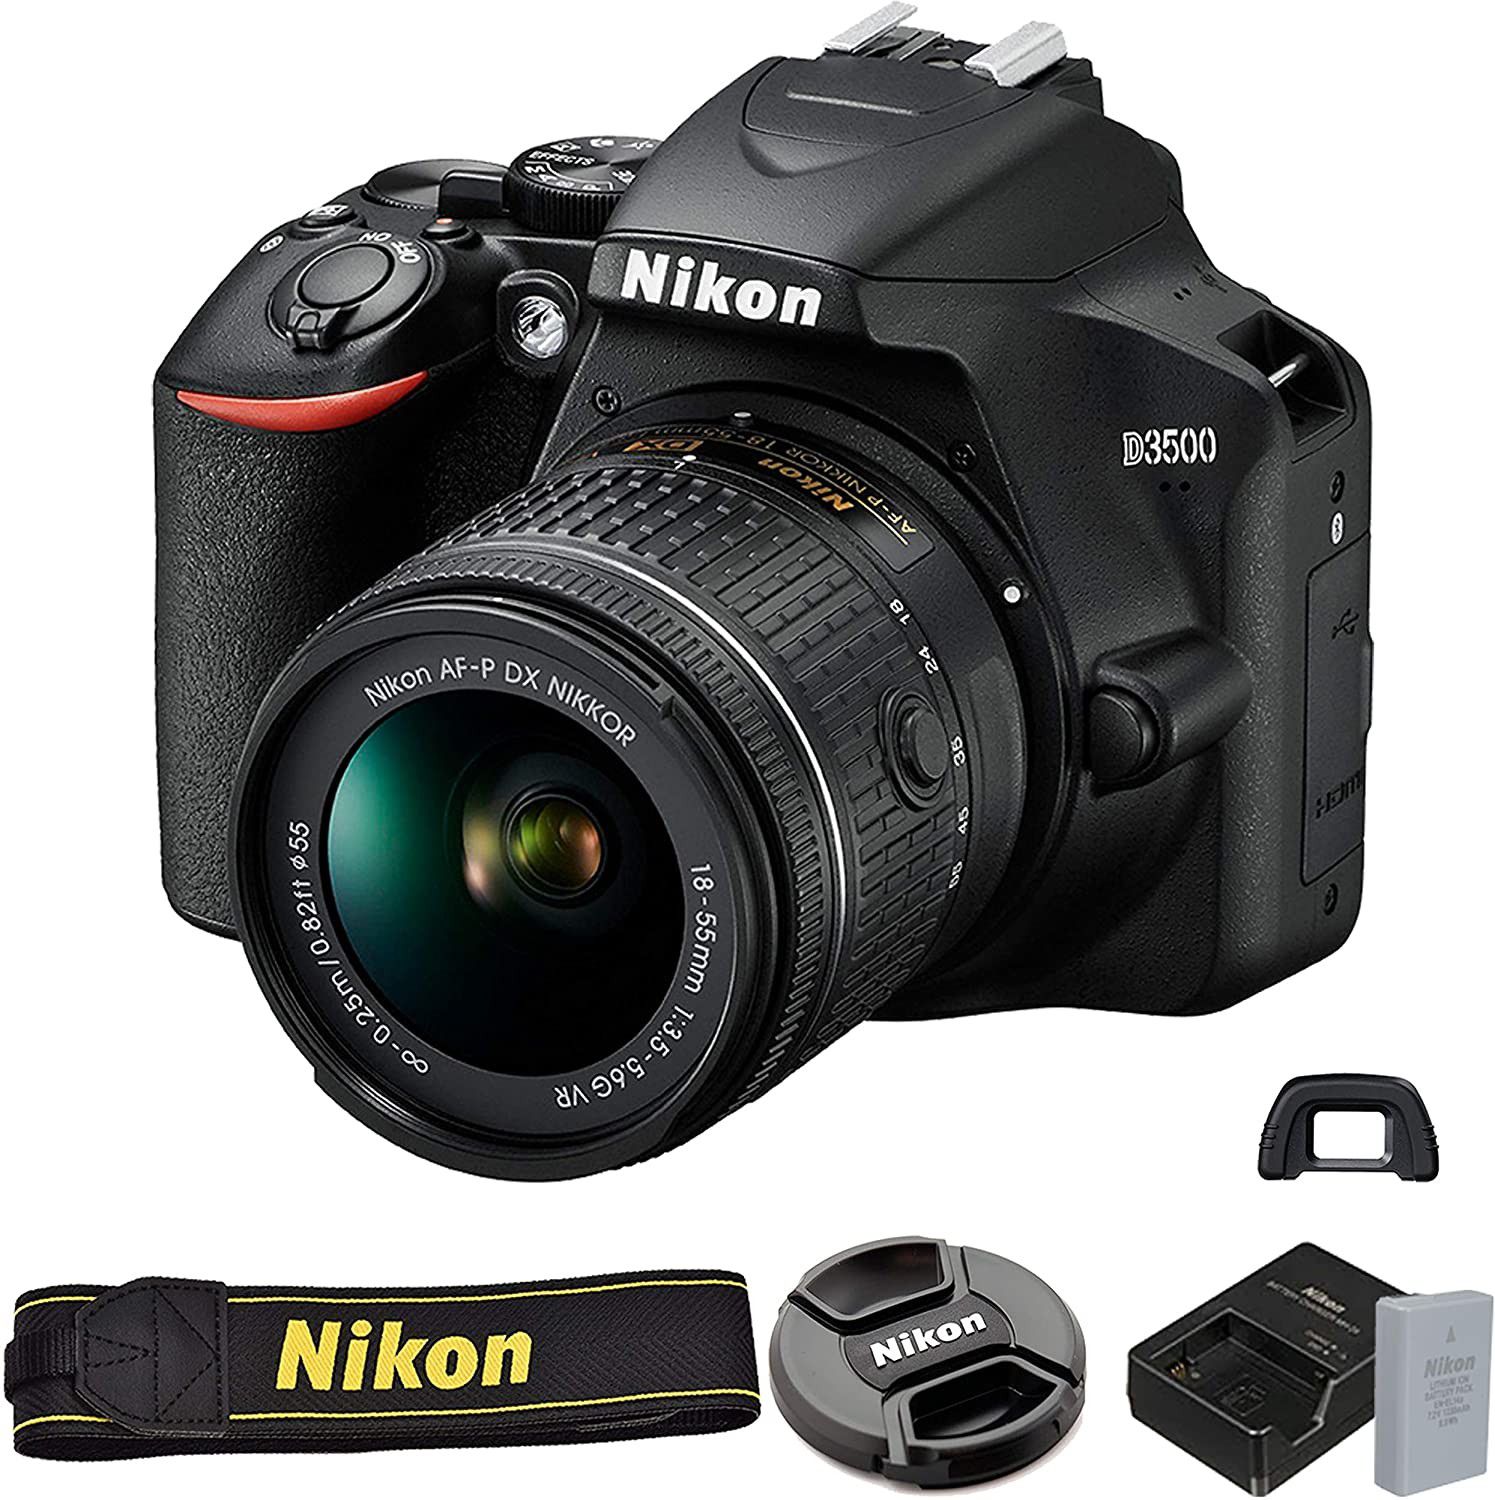 Nikon D3500, Lenses, Camera, Flash, bundle